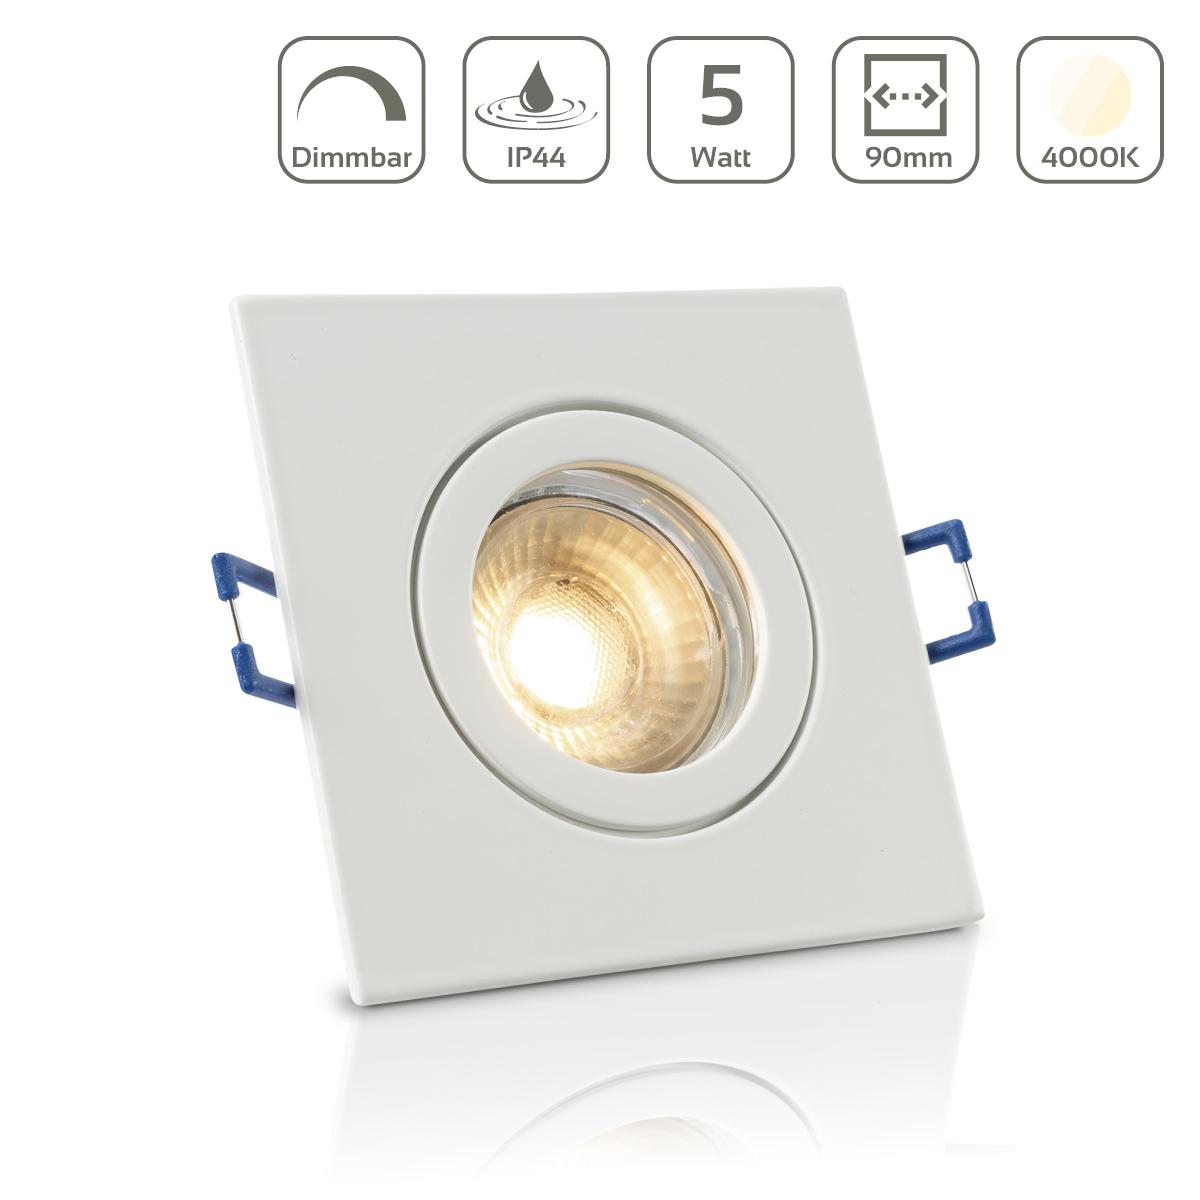 Einbauspot IP44 eckig - Farbe: weiß - LED Leuchtmittel: GU10 5W neutralweiß dimmbar